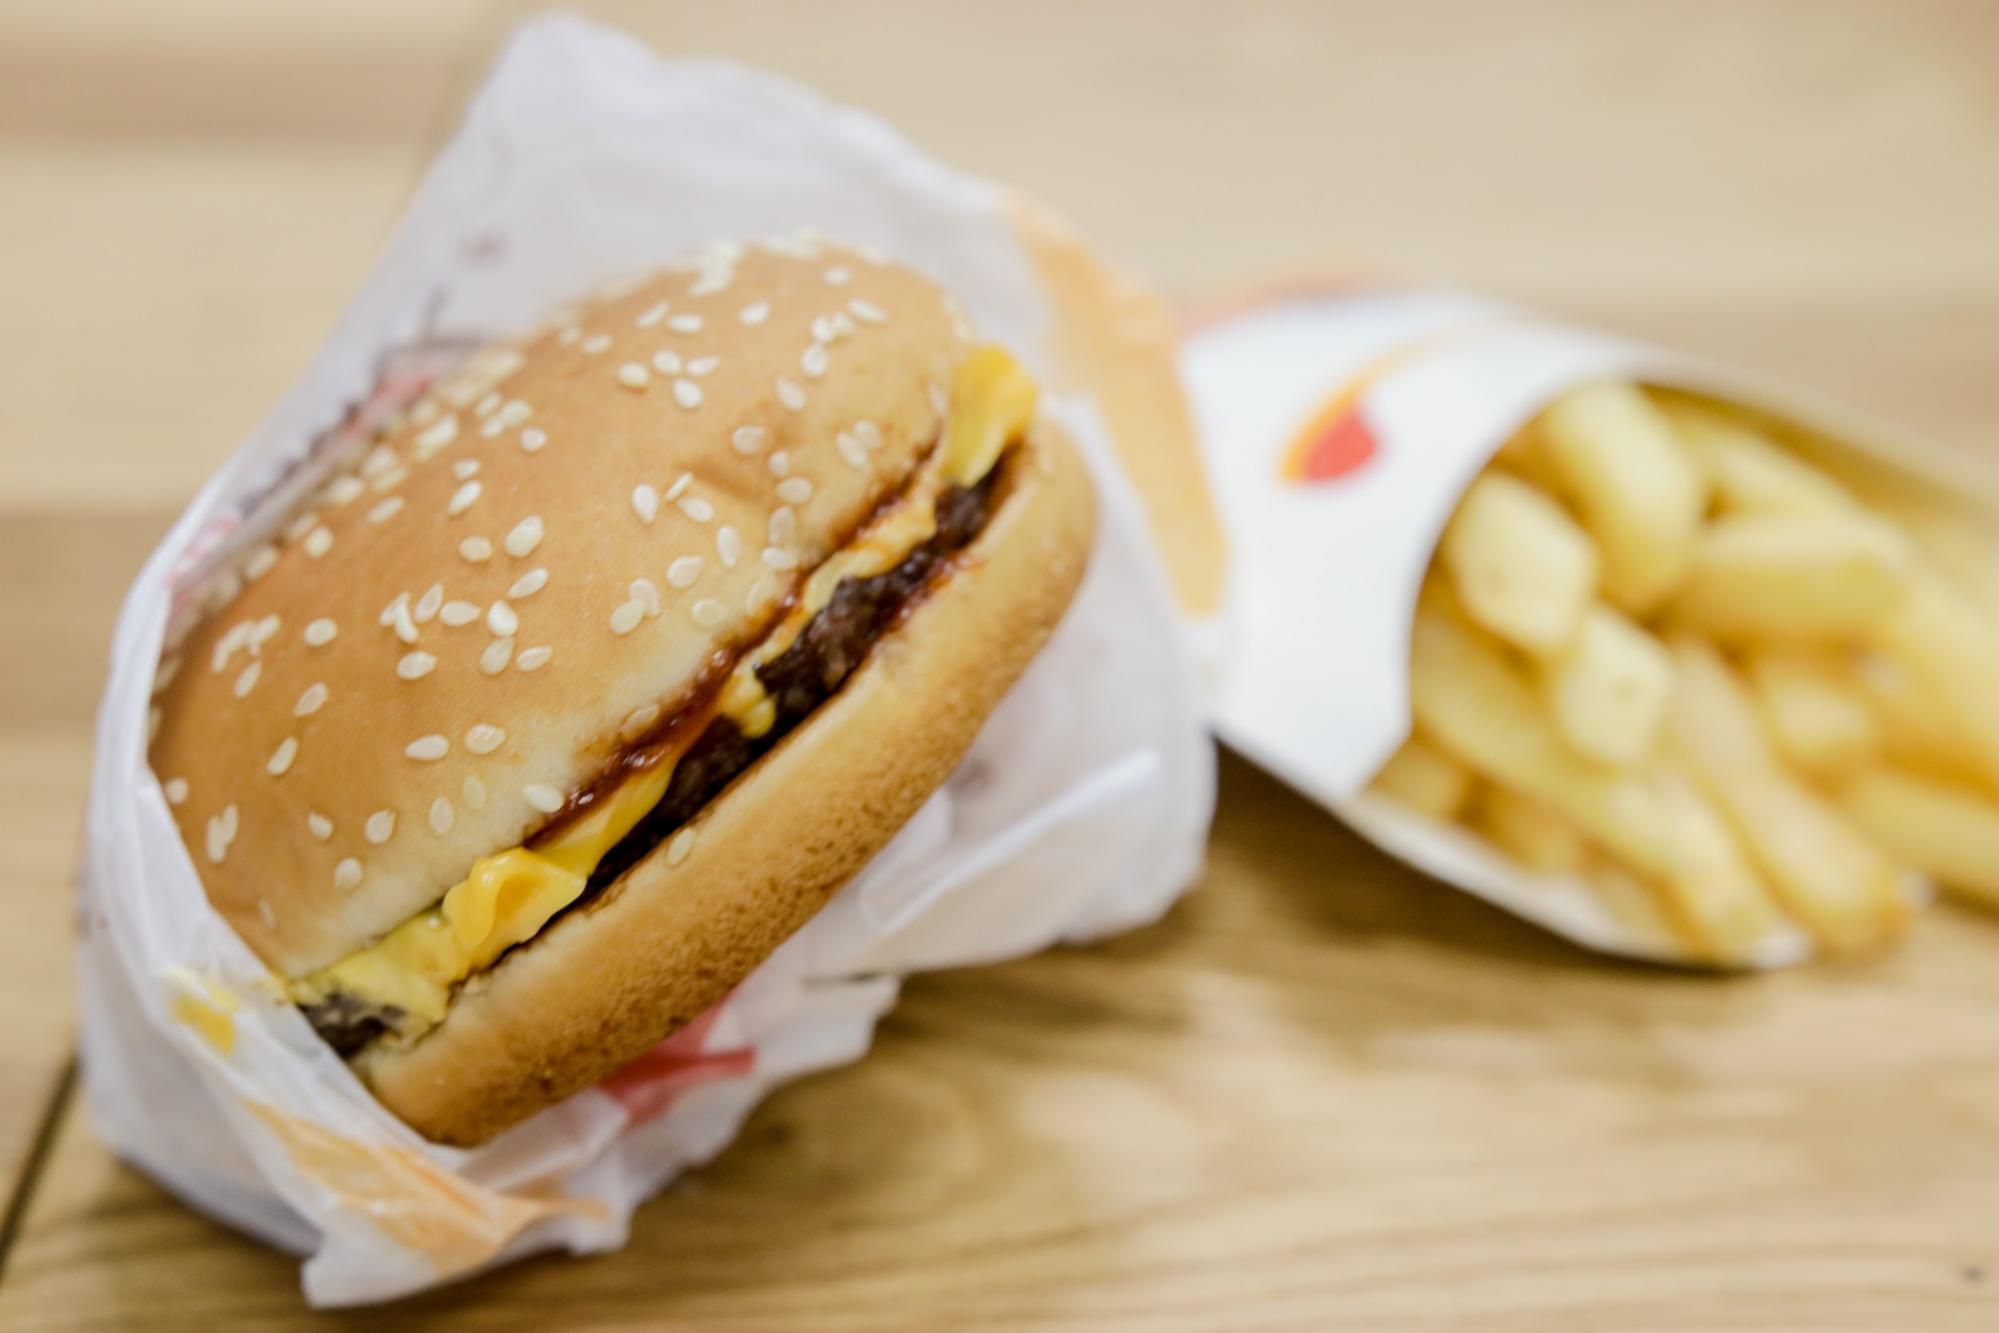 Every burger on the Burger King menu, ranked - Mothership.SG - News ...